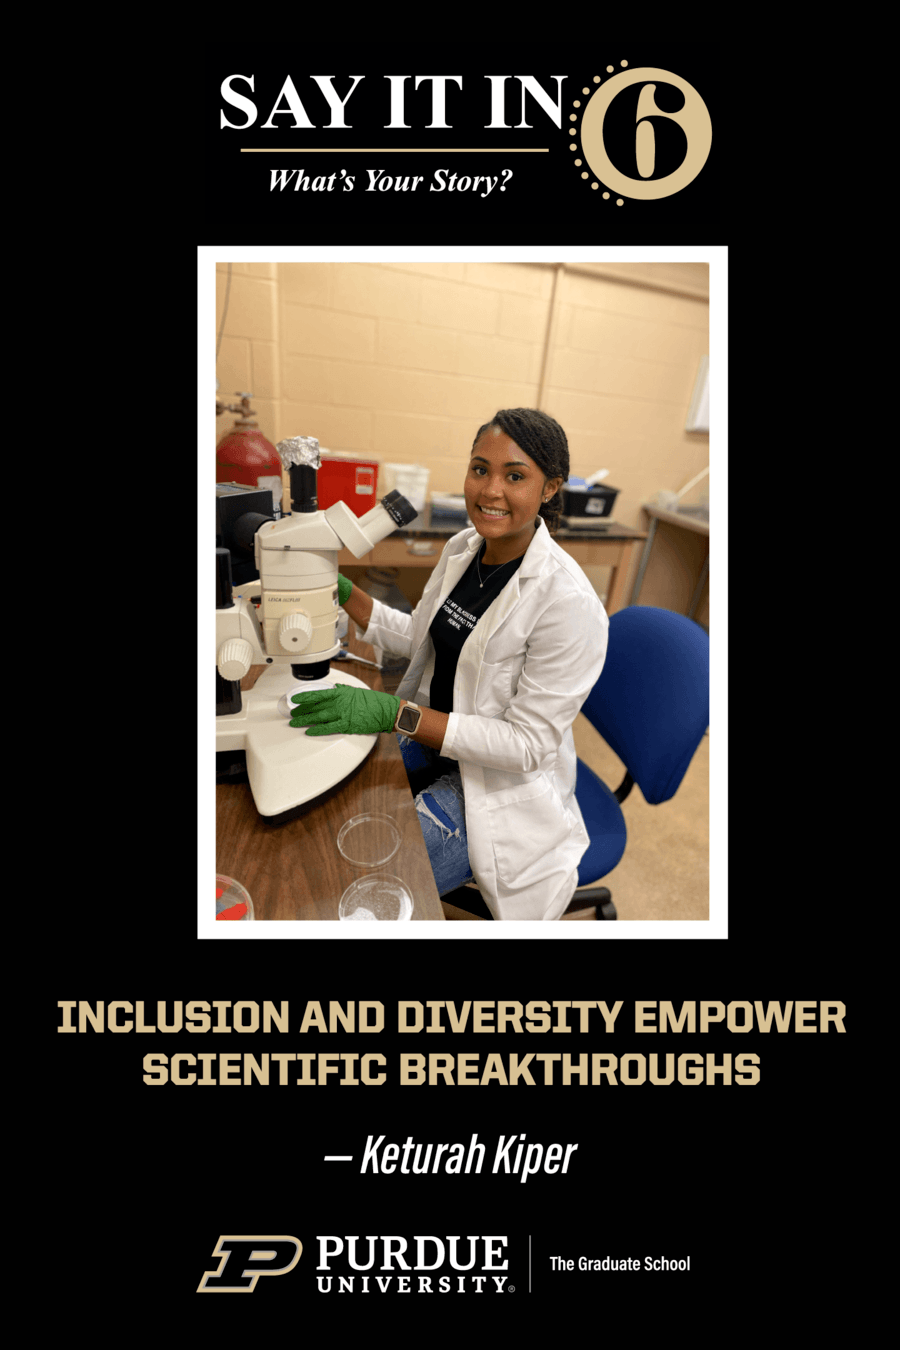 "Inclusion and diversity empower scientific breakthroughs." - Keturah Kiper